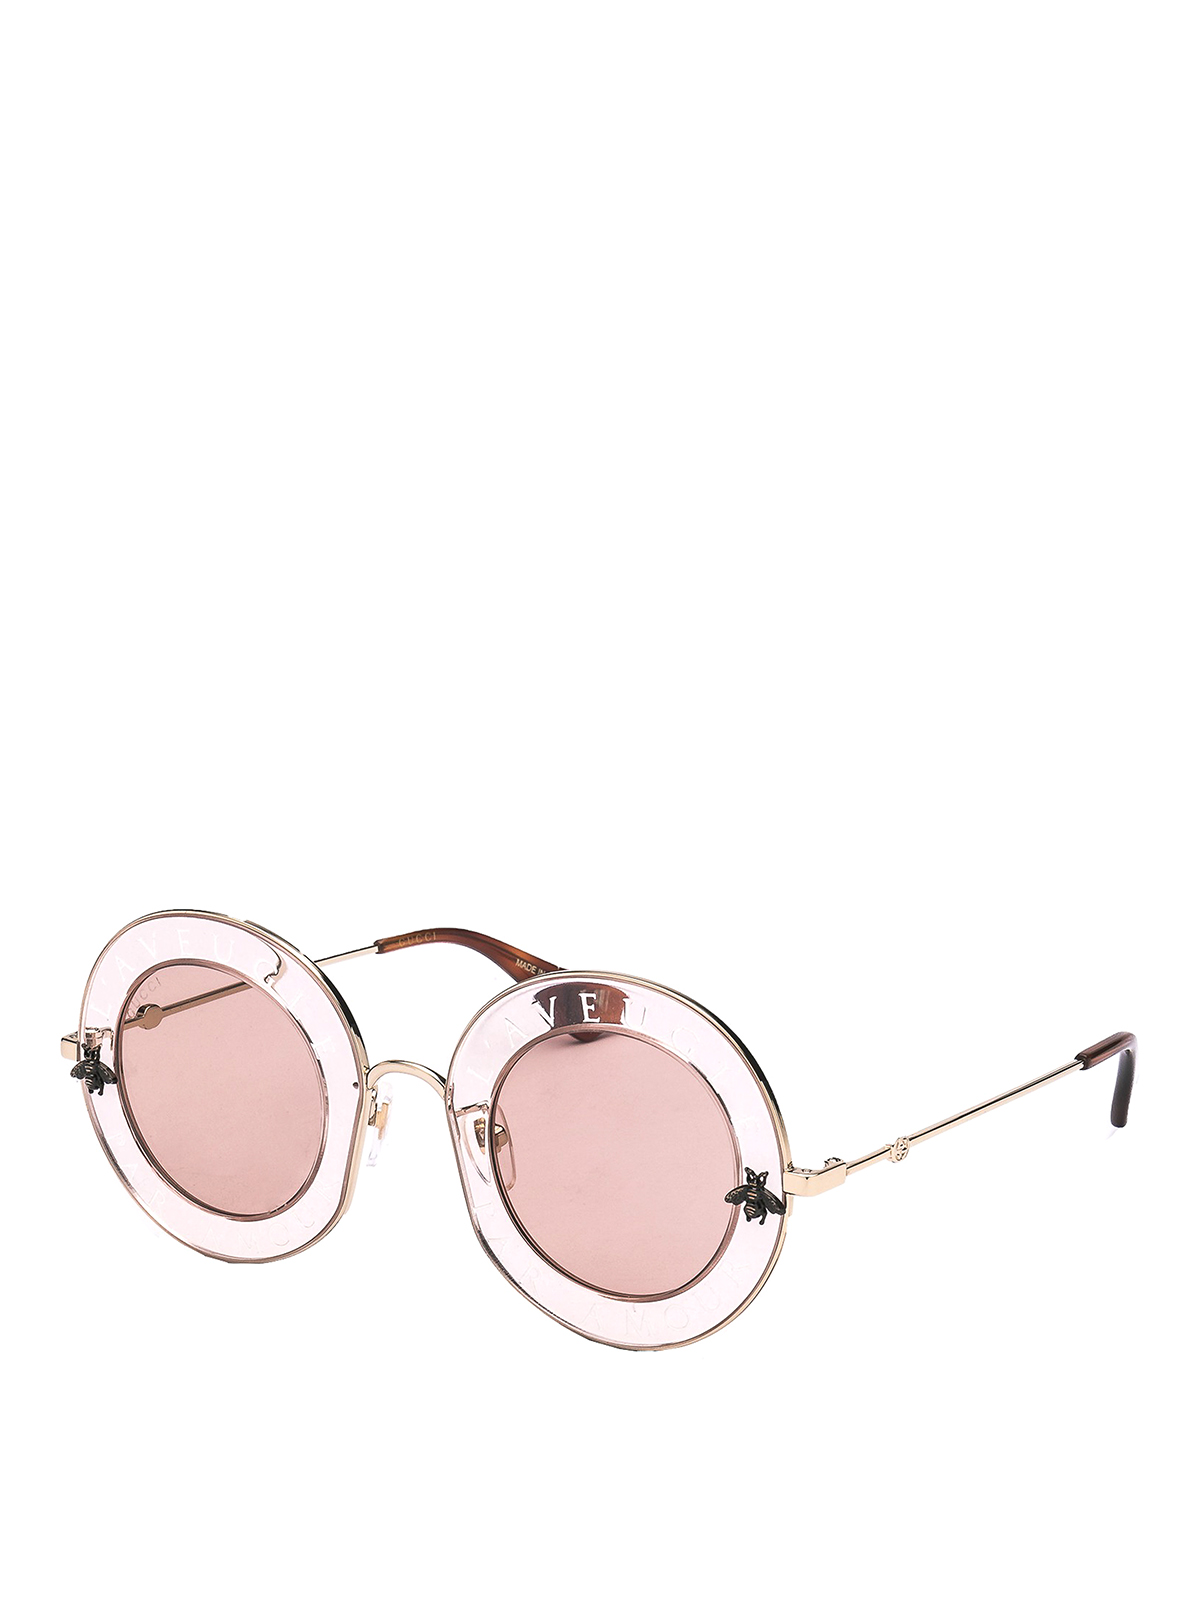 Sunglasses Gucci - L'Aveugle Par Amour sunglasses - GG0113S004 